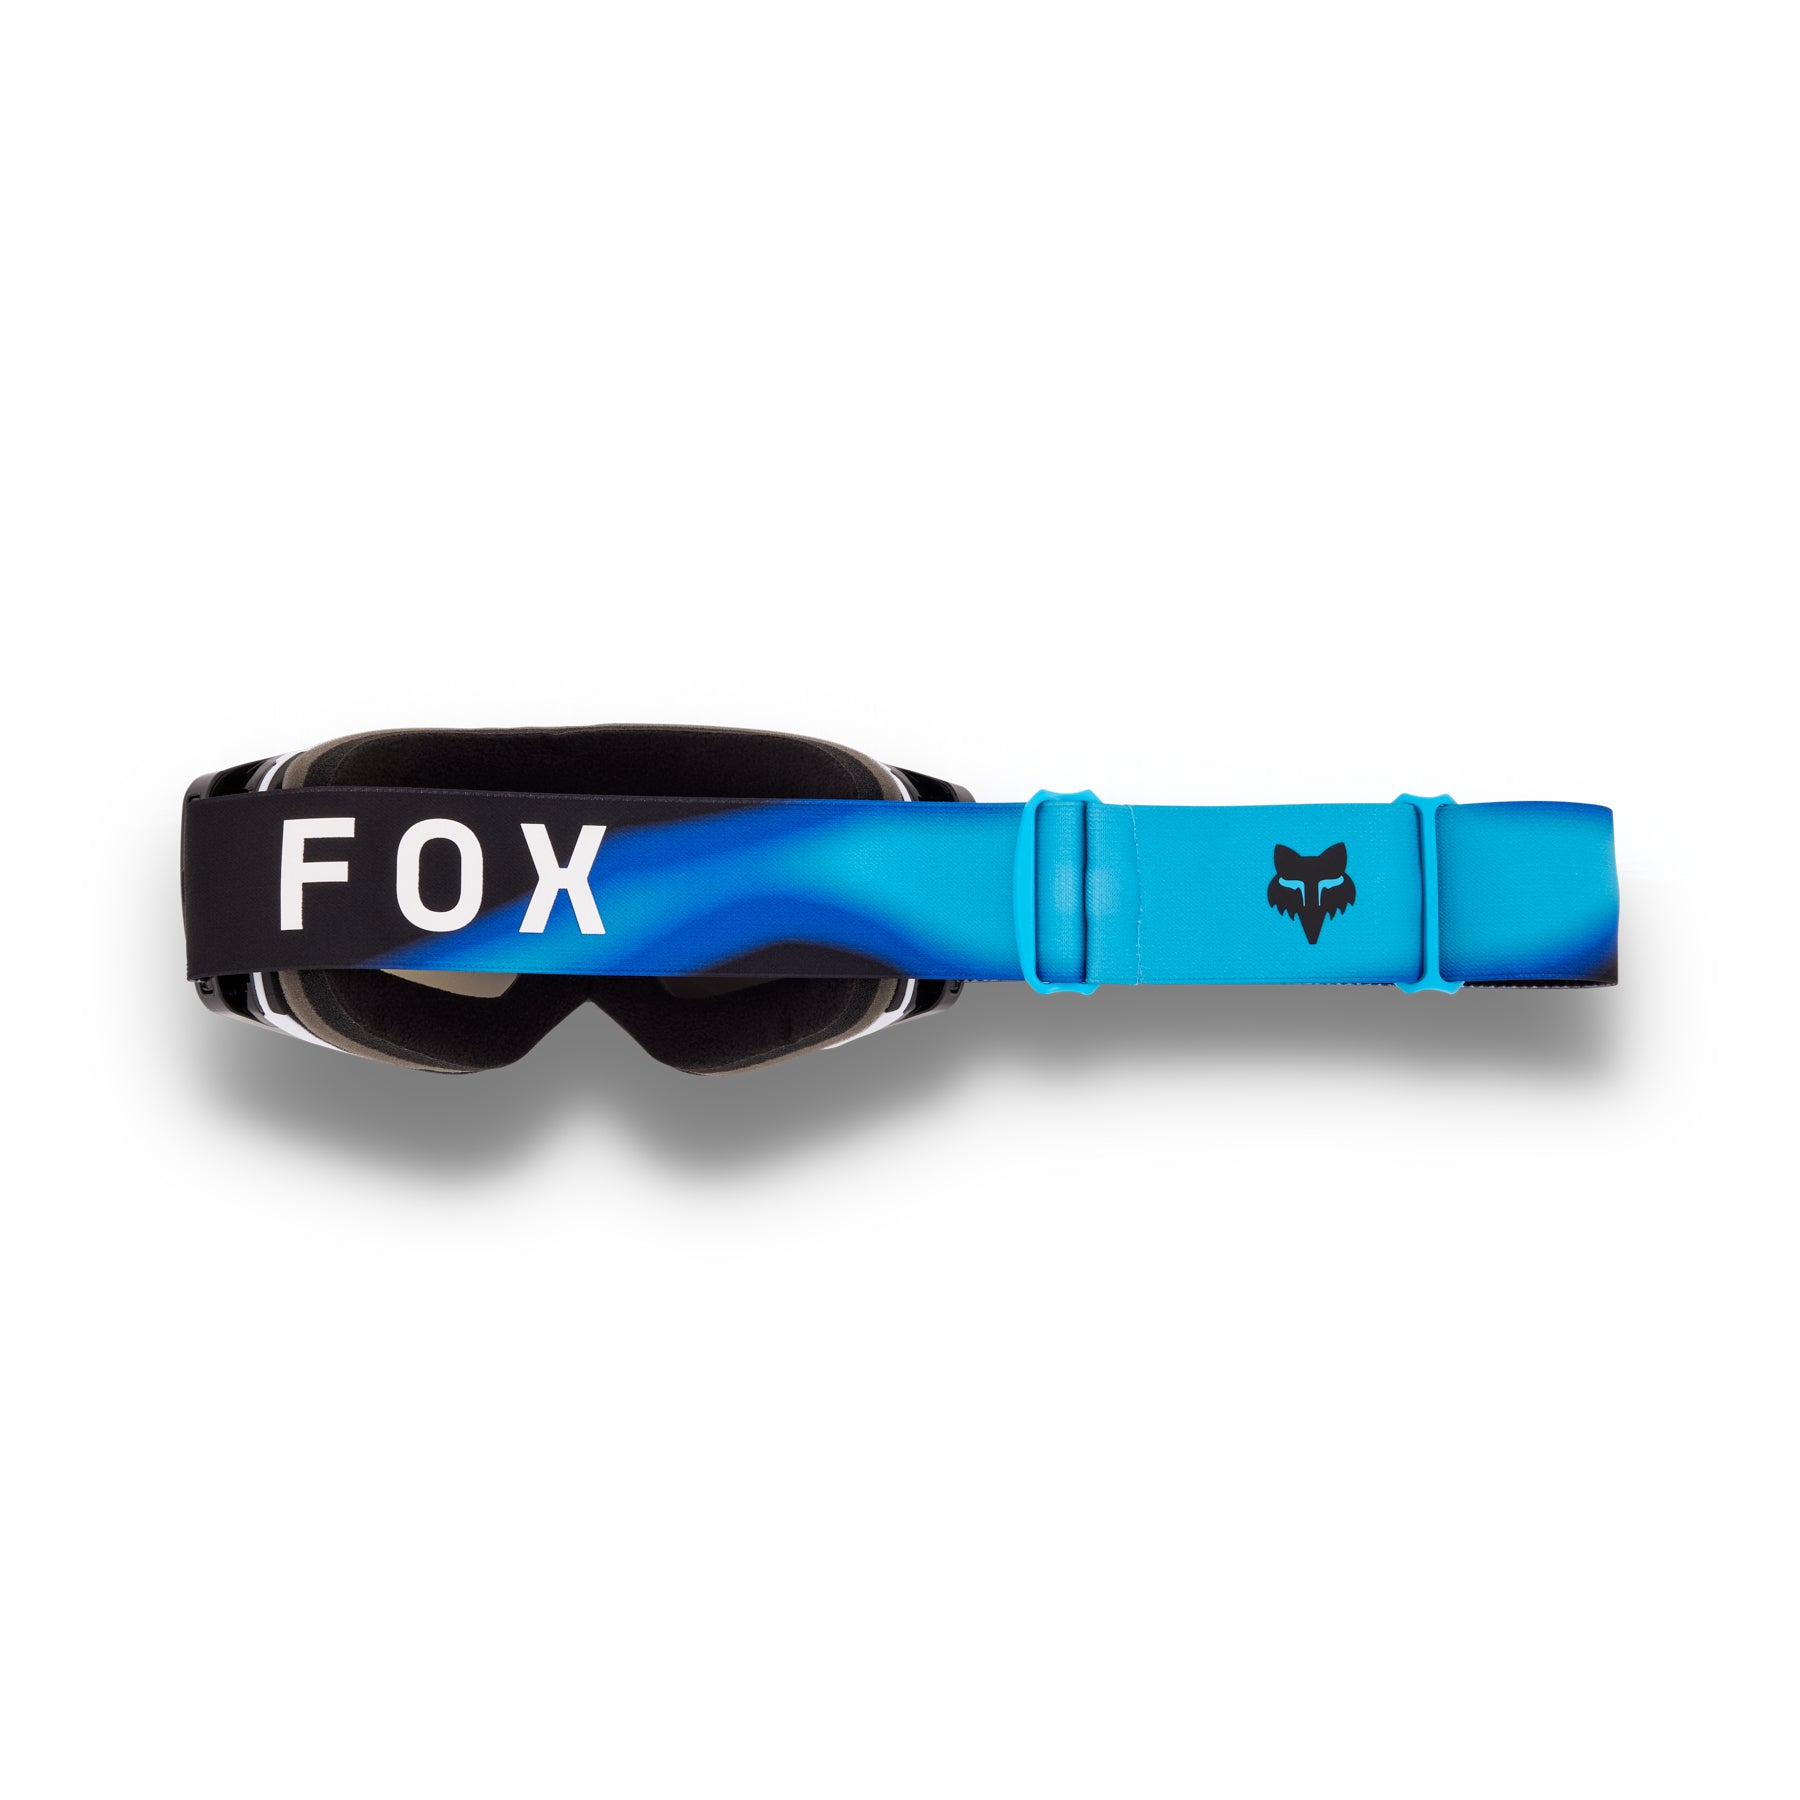 Fox Vue Volatile Goggles - One Size Fits Most - Black - Blue - Spark Mirror Blue Lens - Image 2